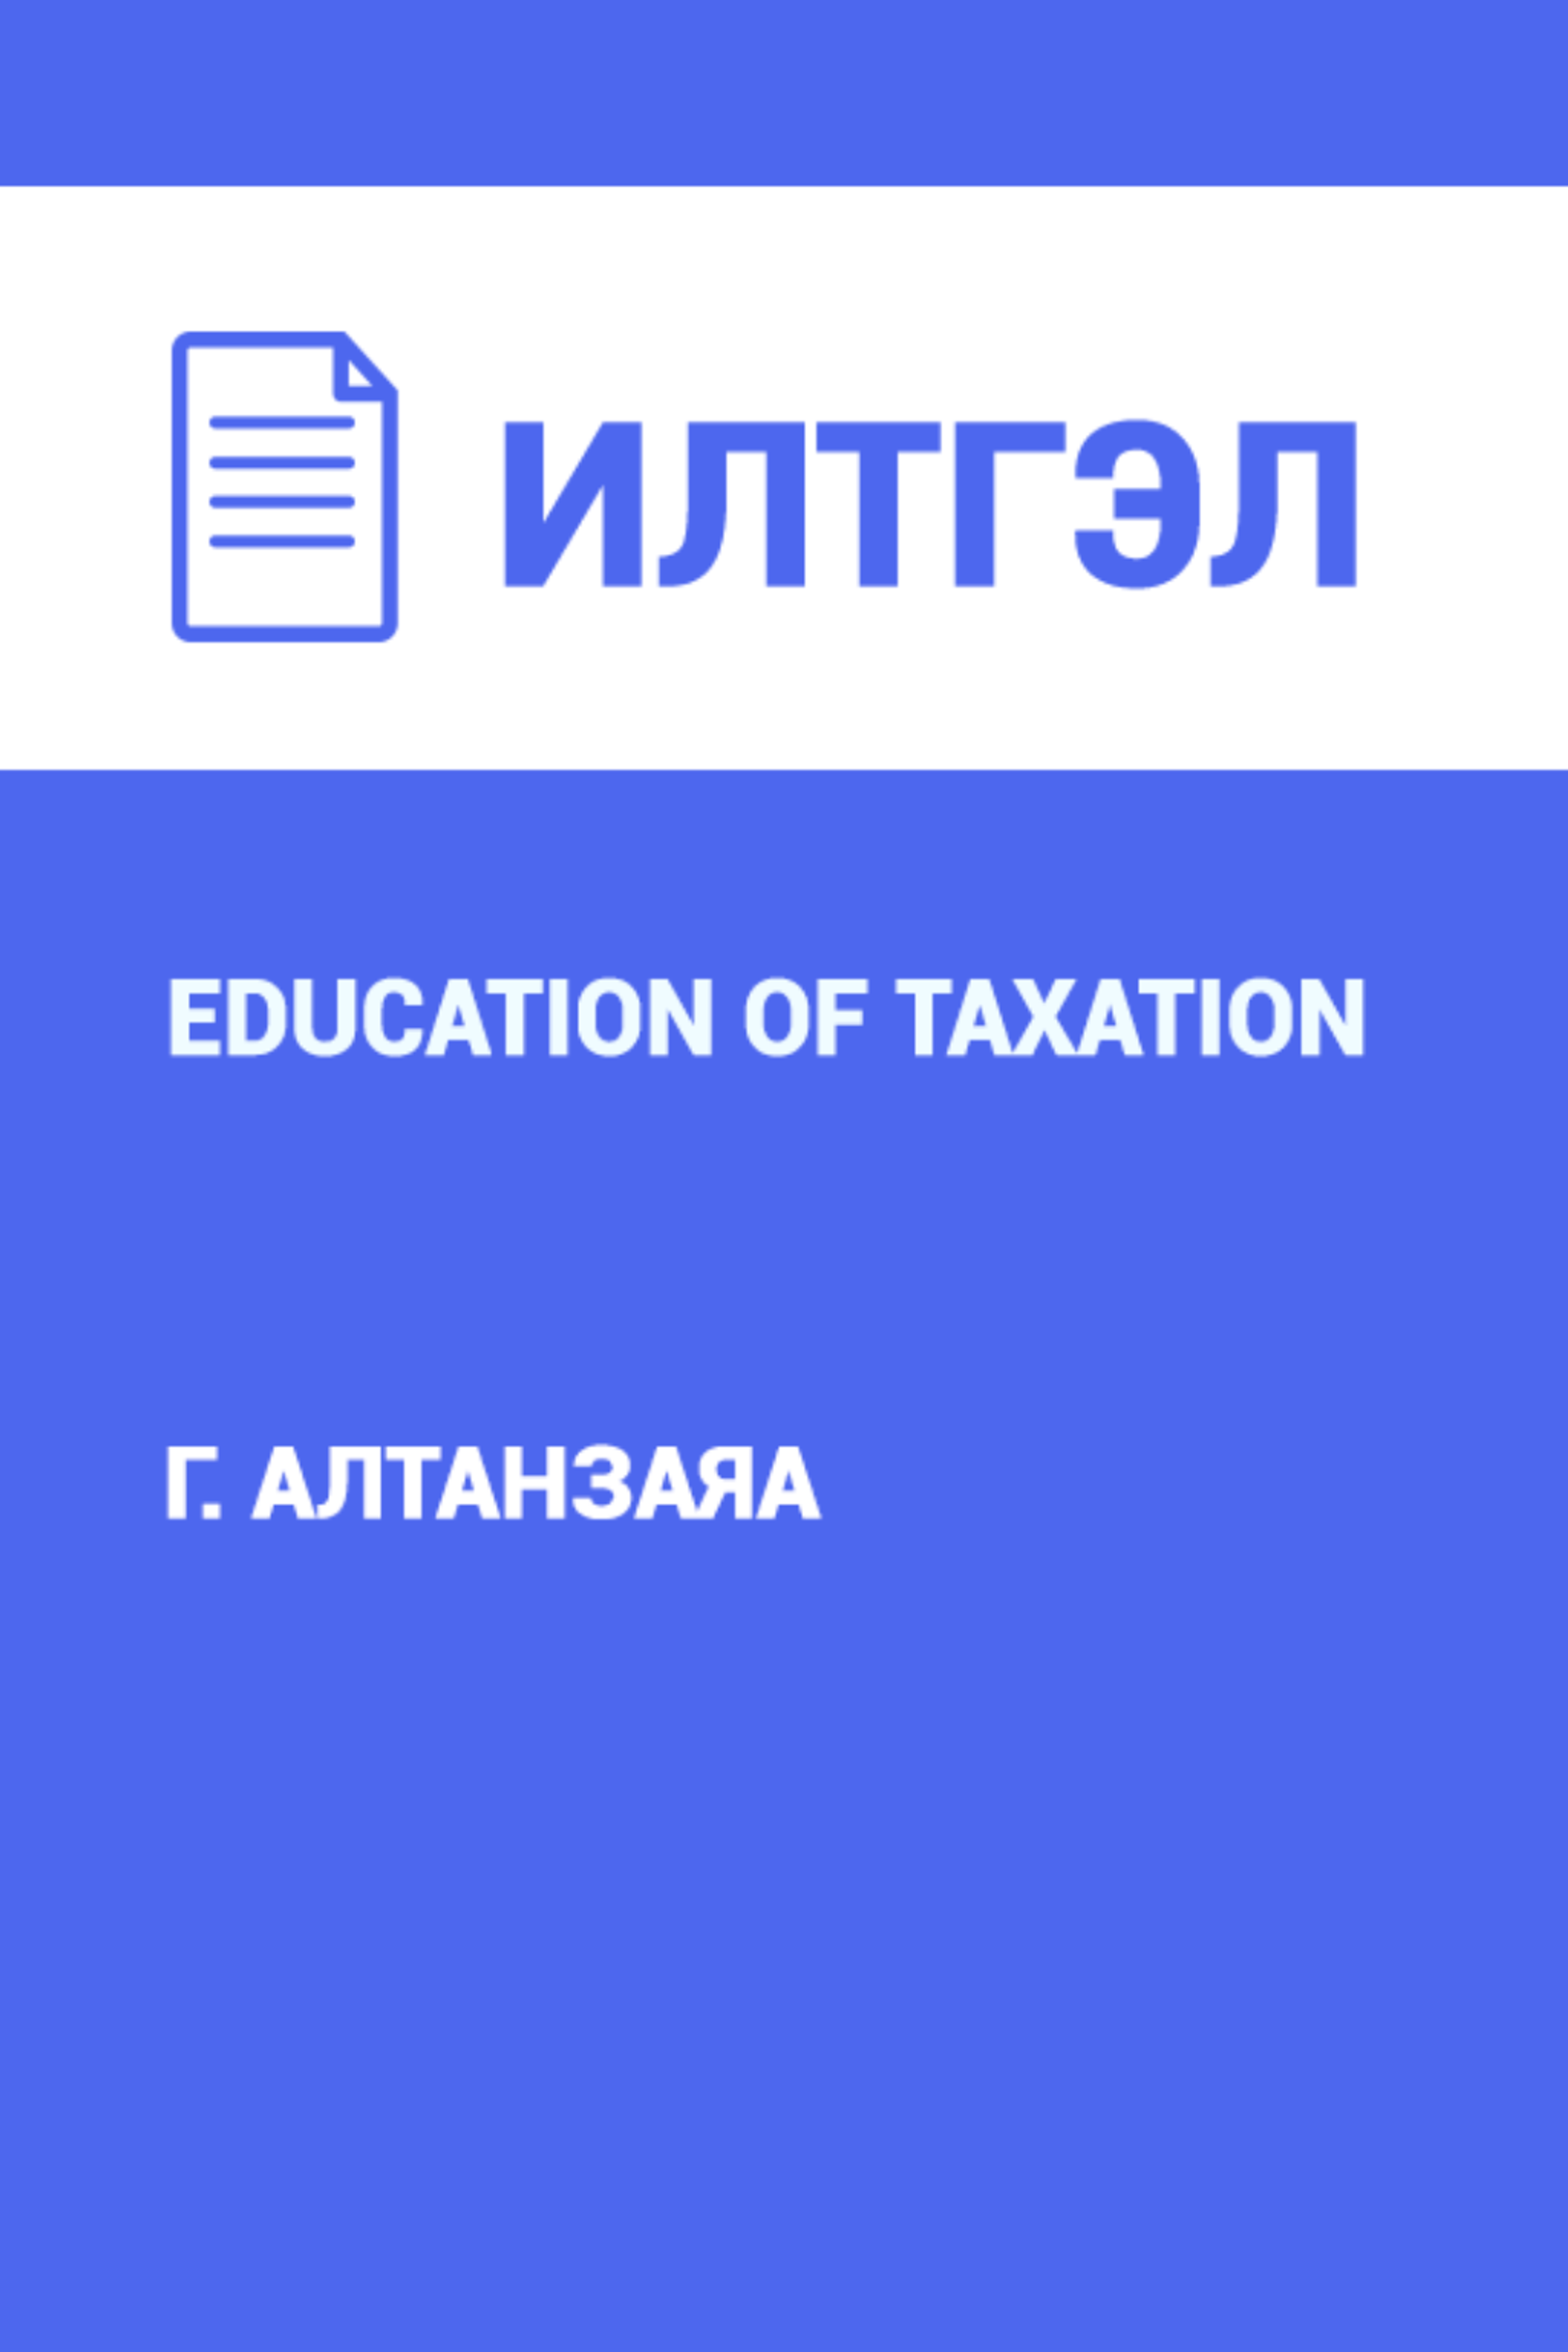 Education of taxation